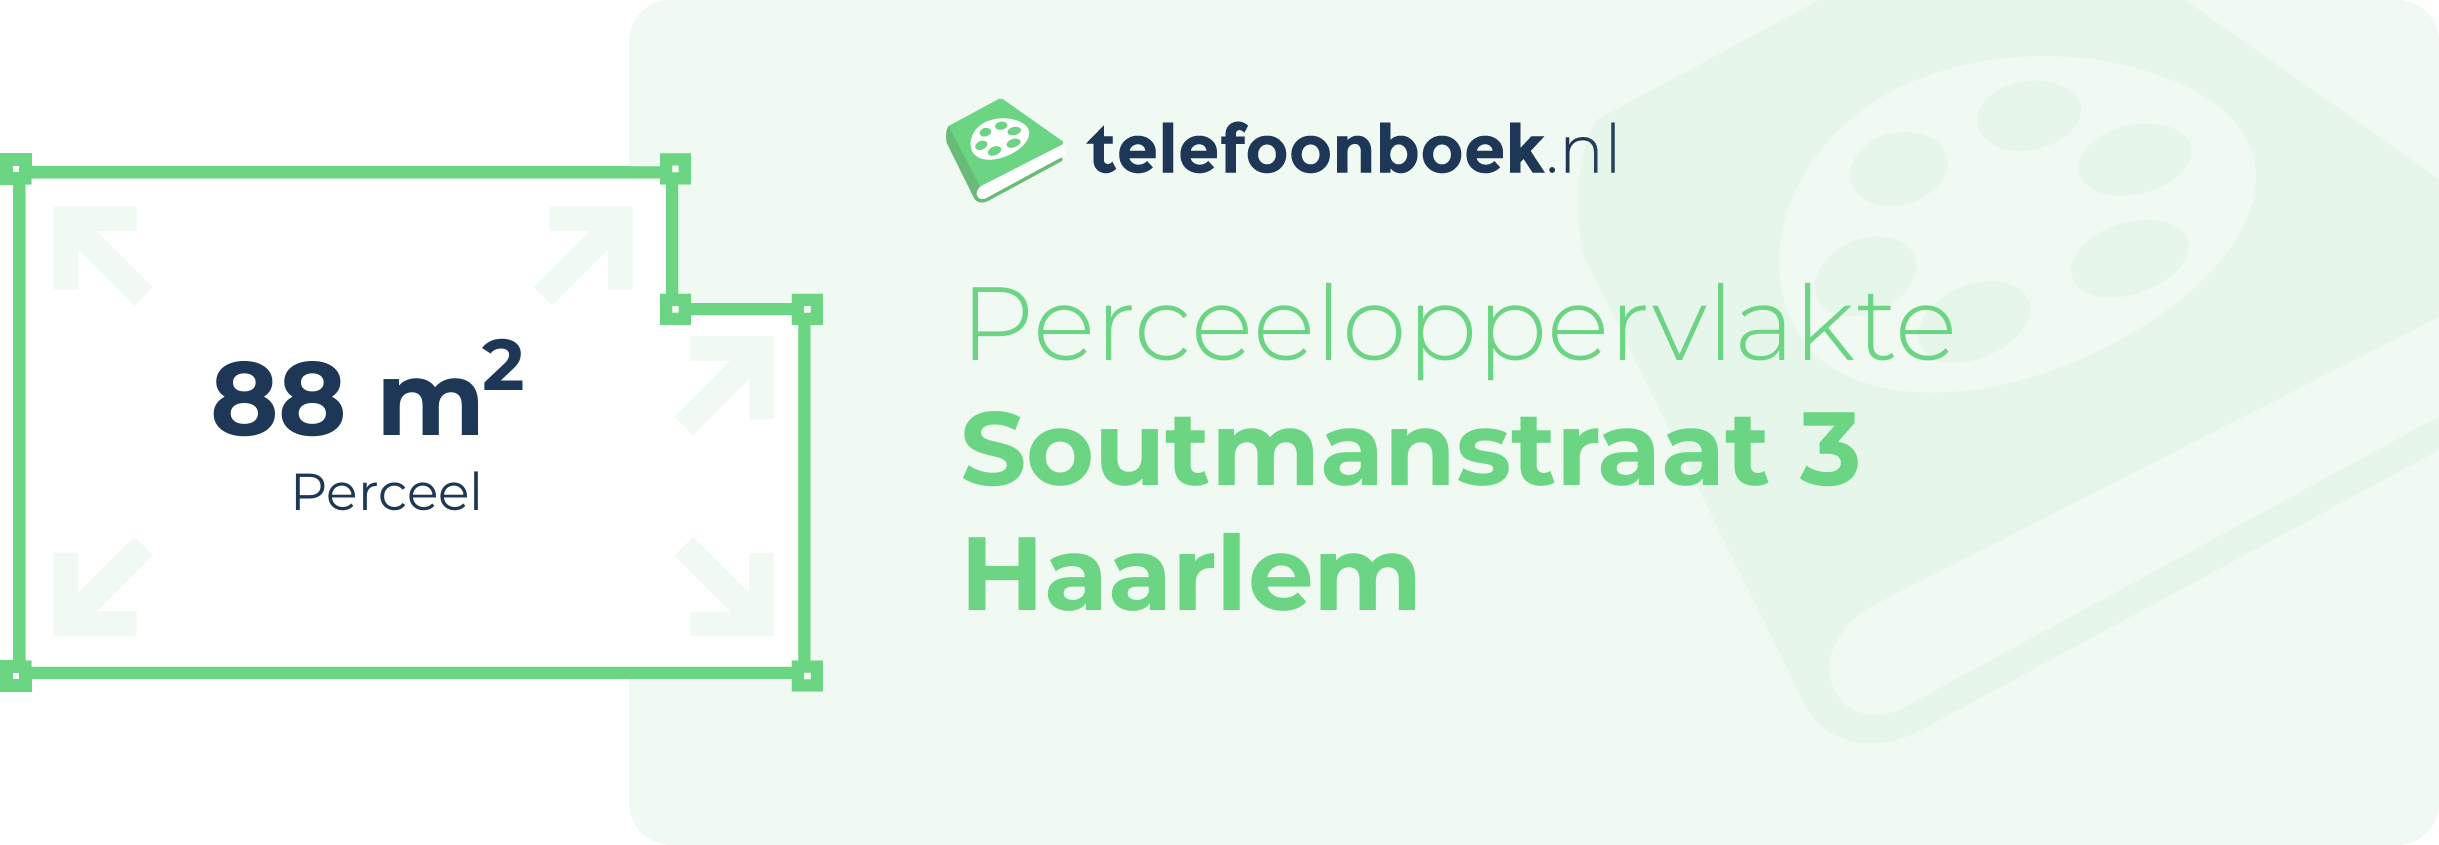 Perceeloppervlakte Soutmanstraat 3 Haarlem